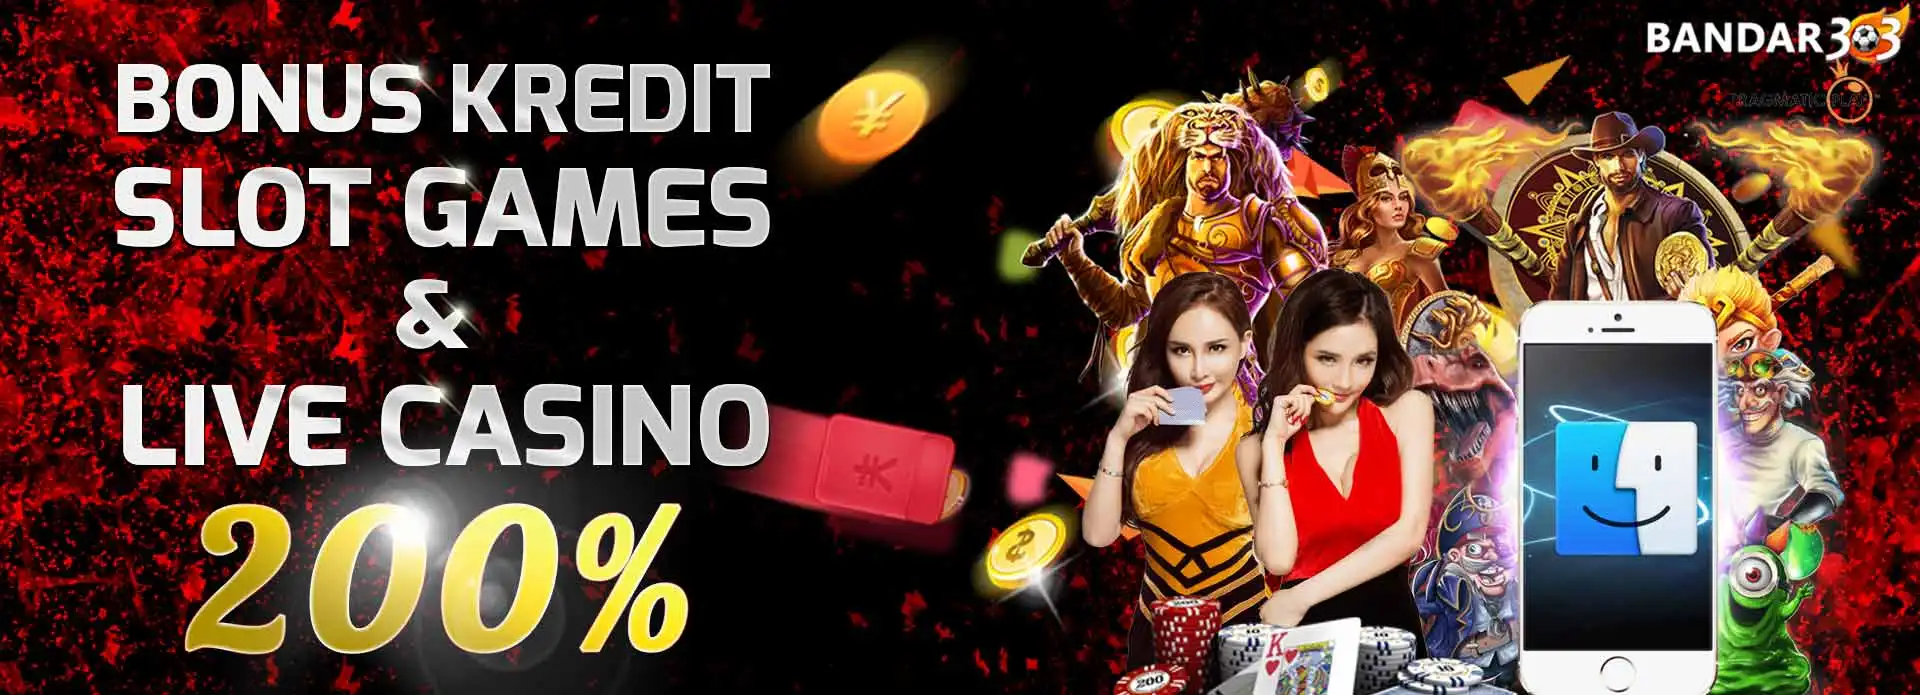 Promo Bonus Kredit 200% Live Casino & Slot Games